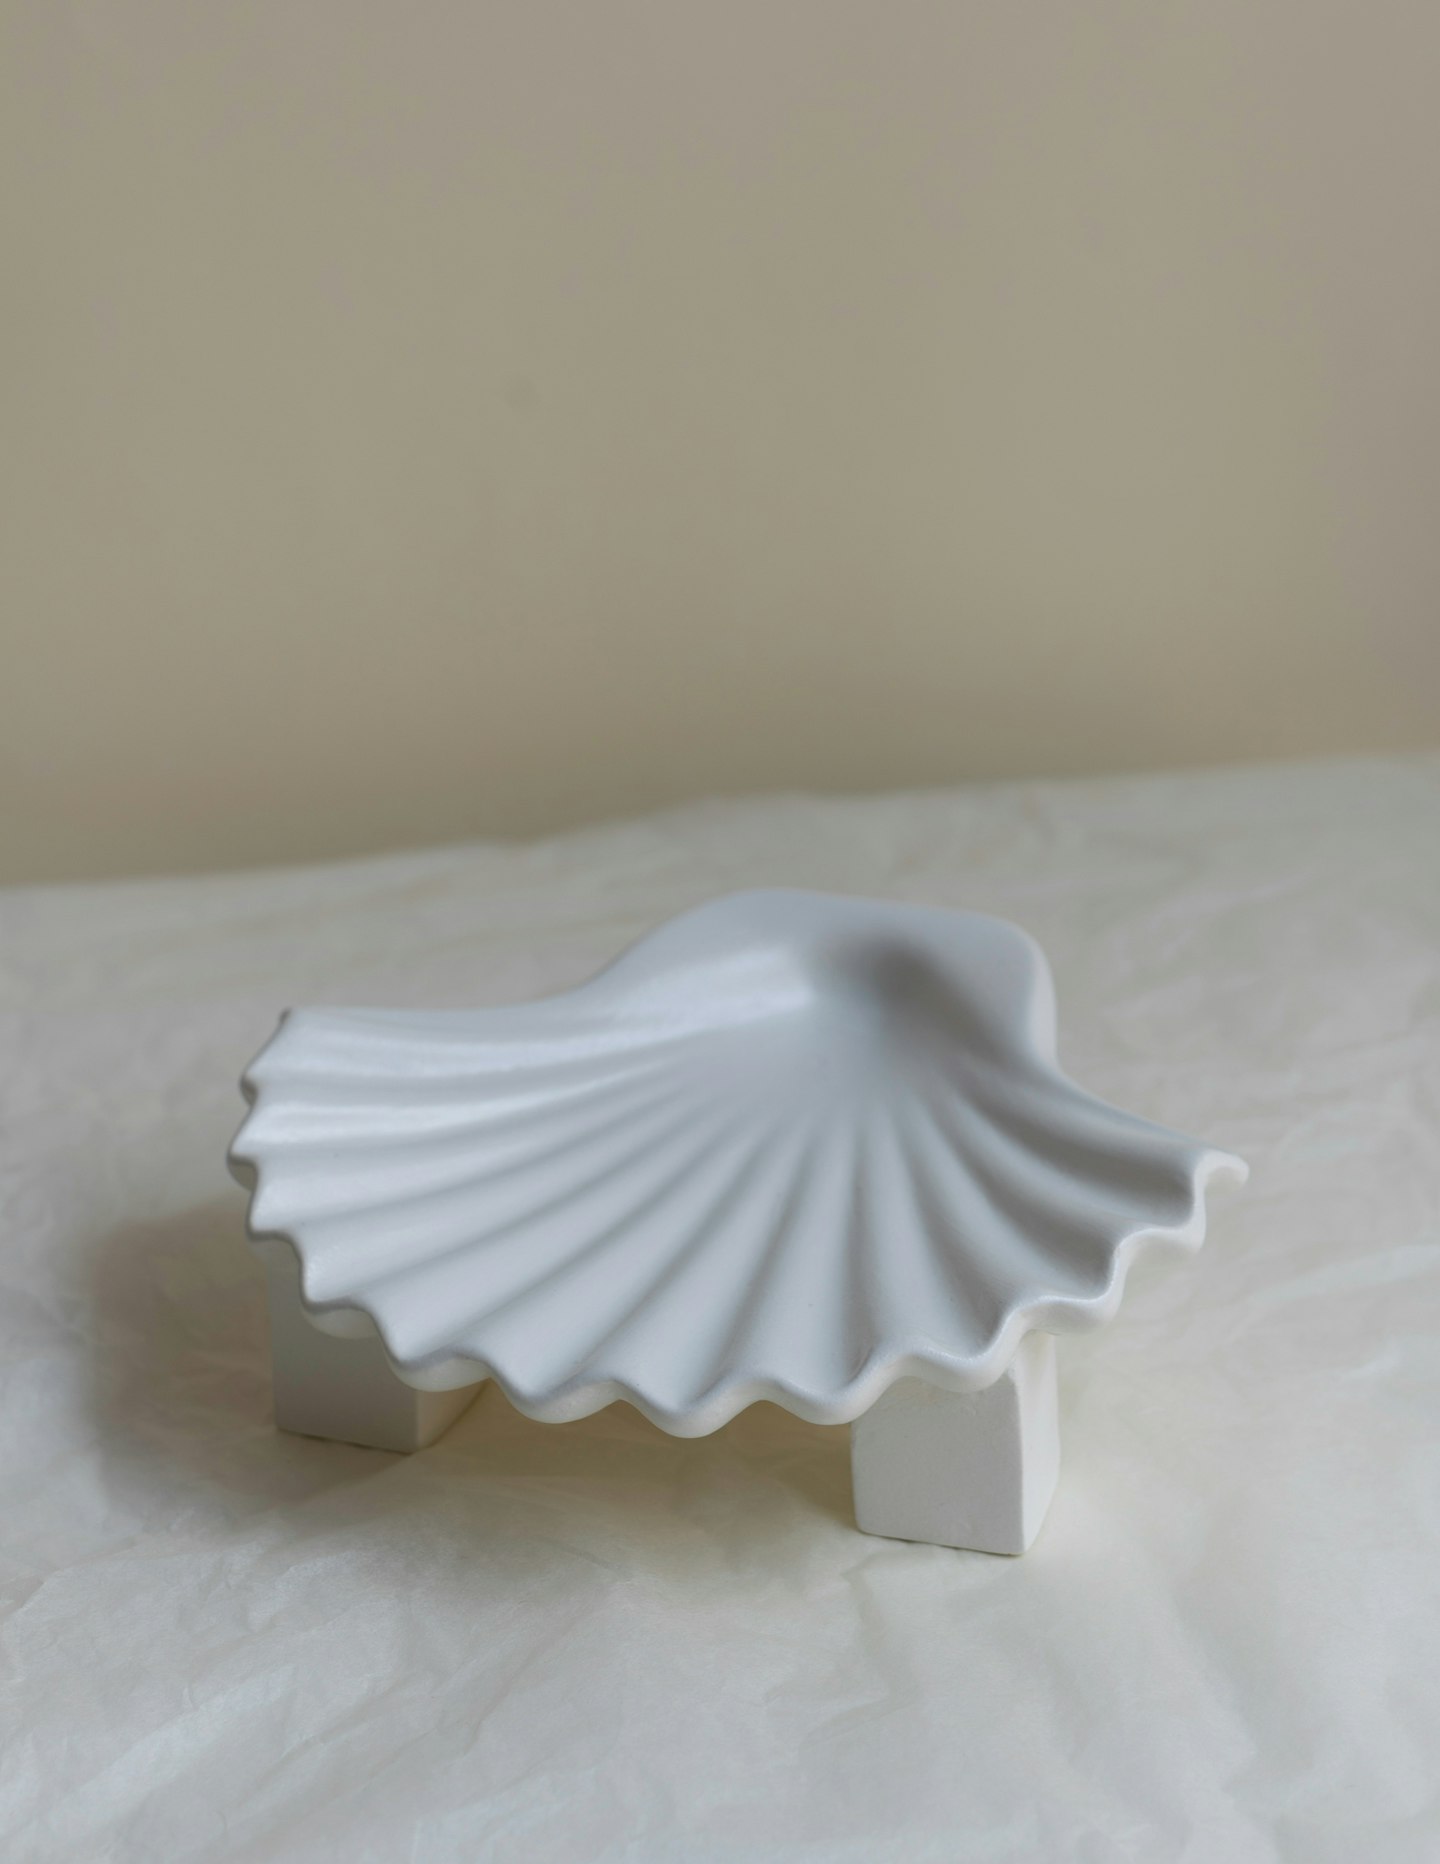 Los Objetos Decorativos, Seashell Plate, u20ac125